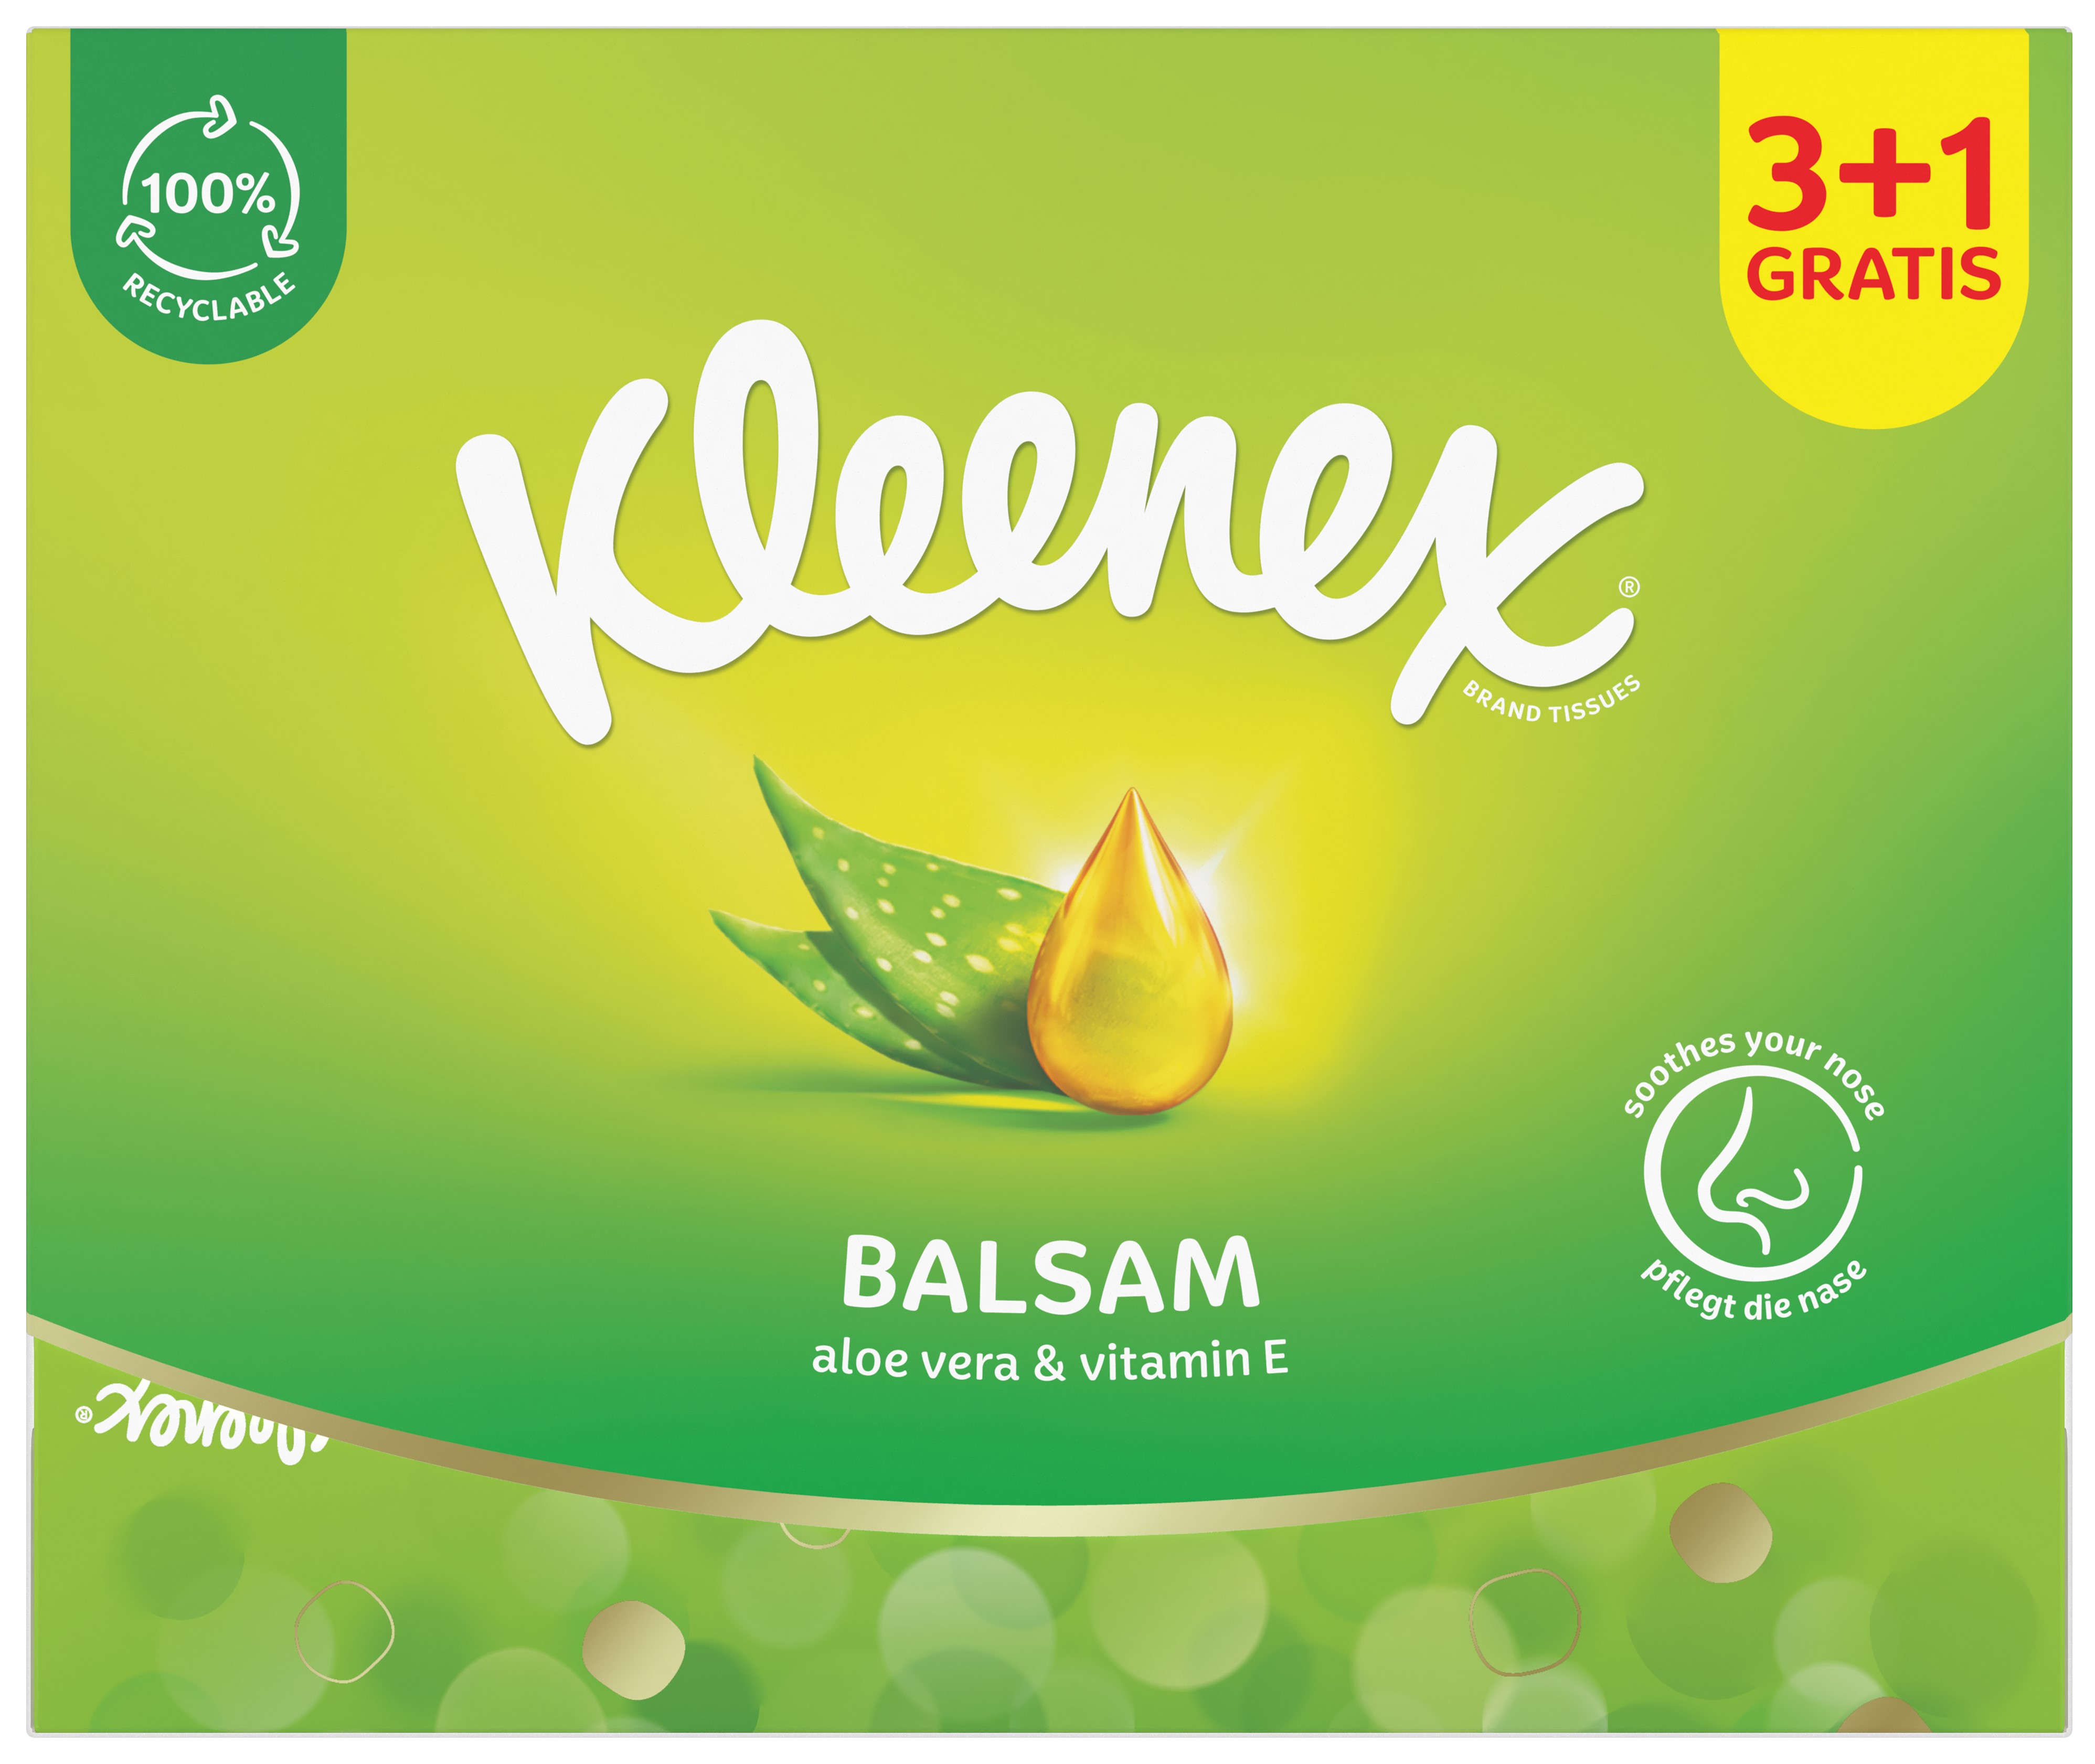 KLEENEX Balsam Box